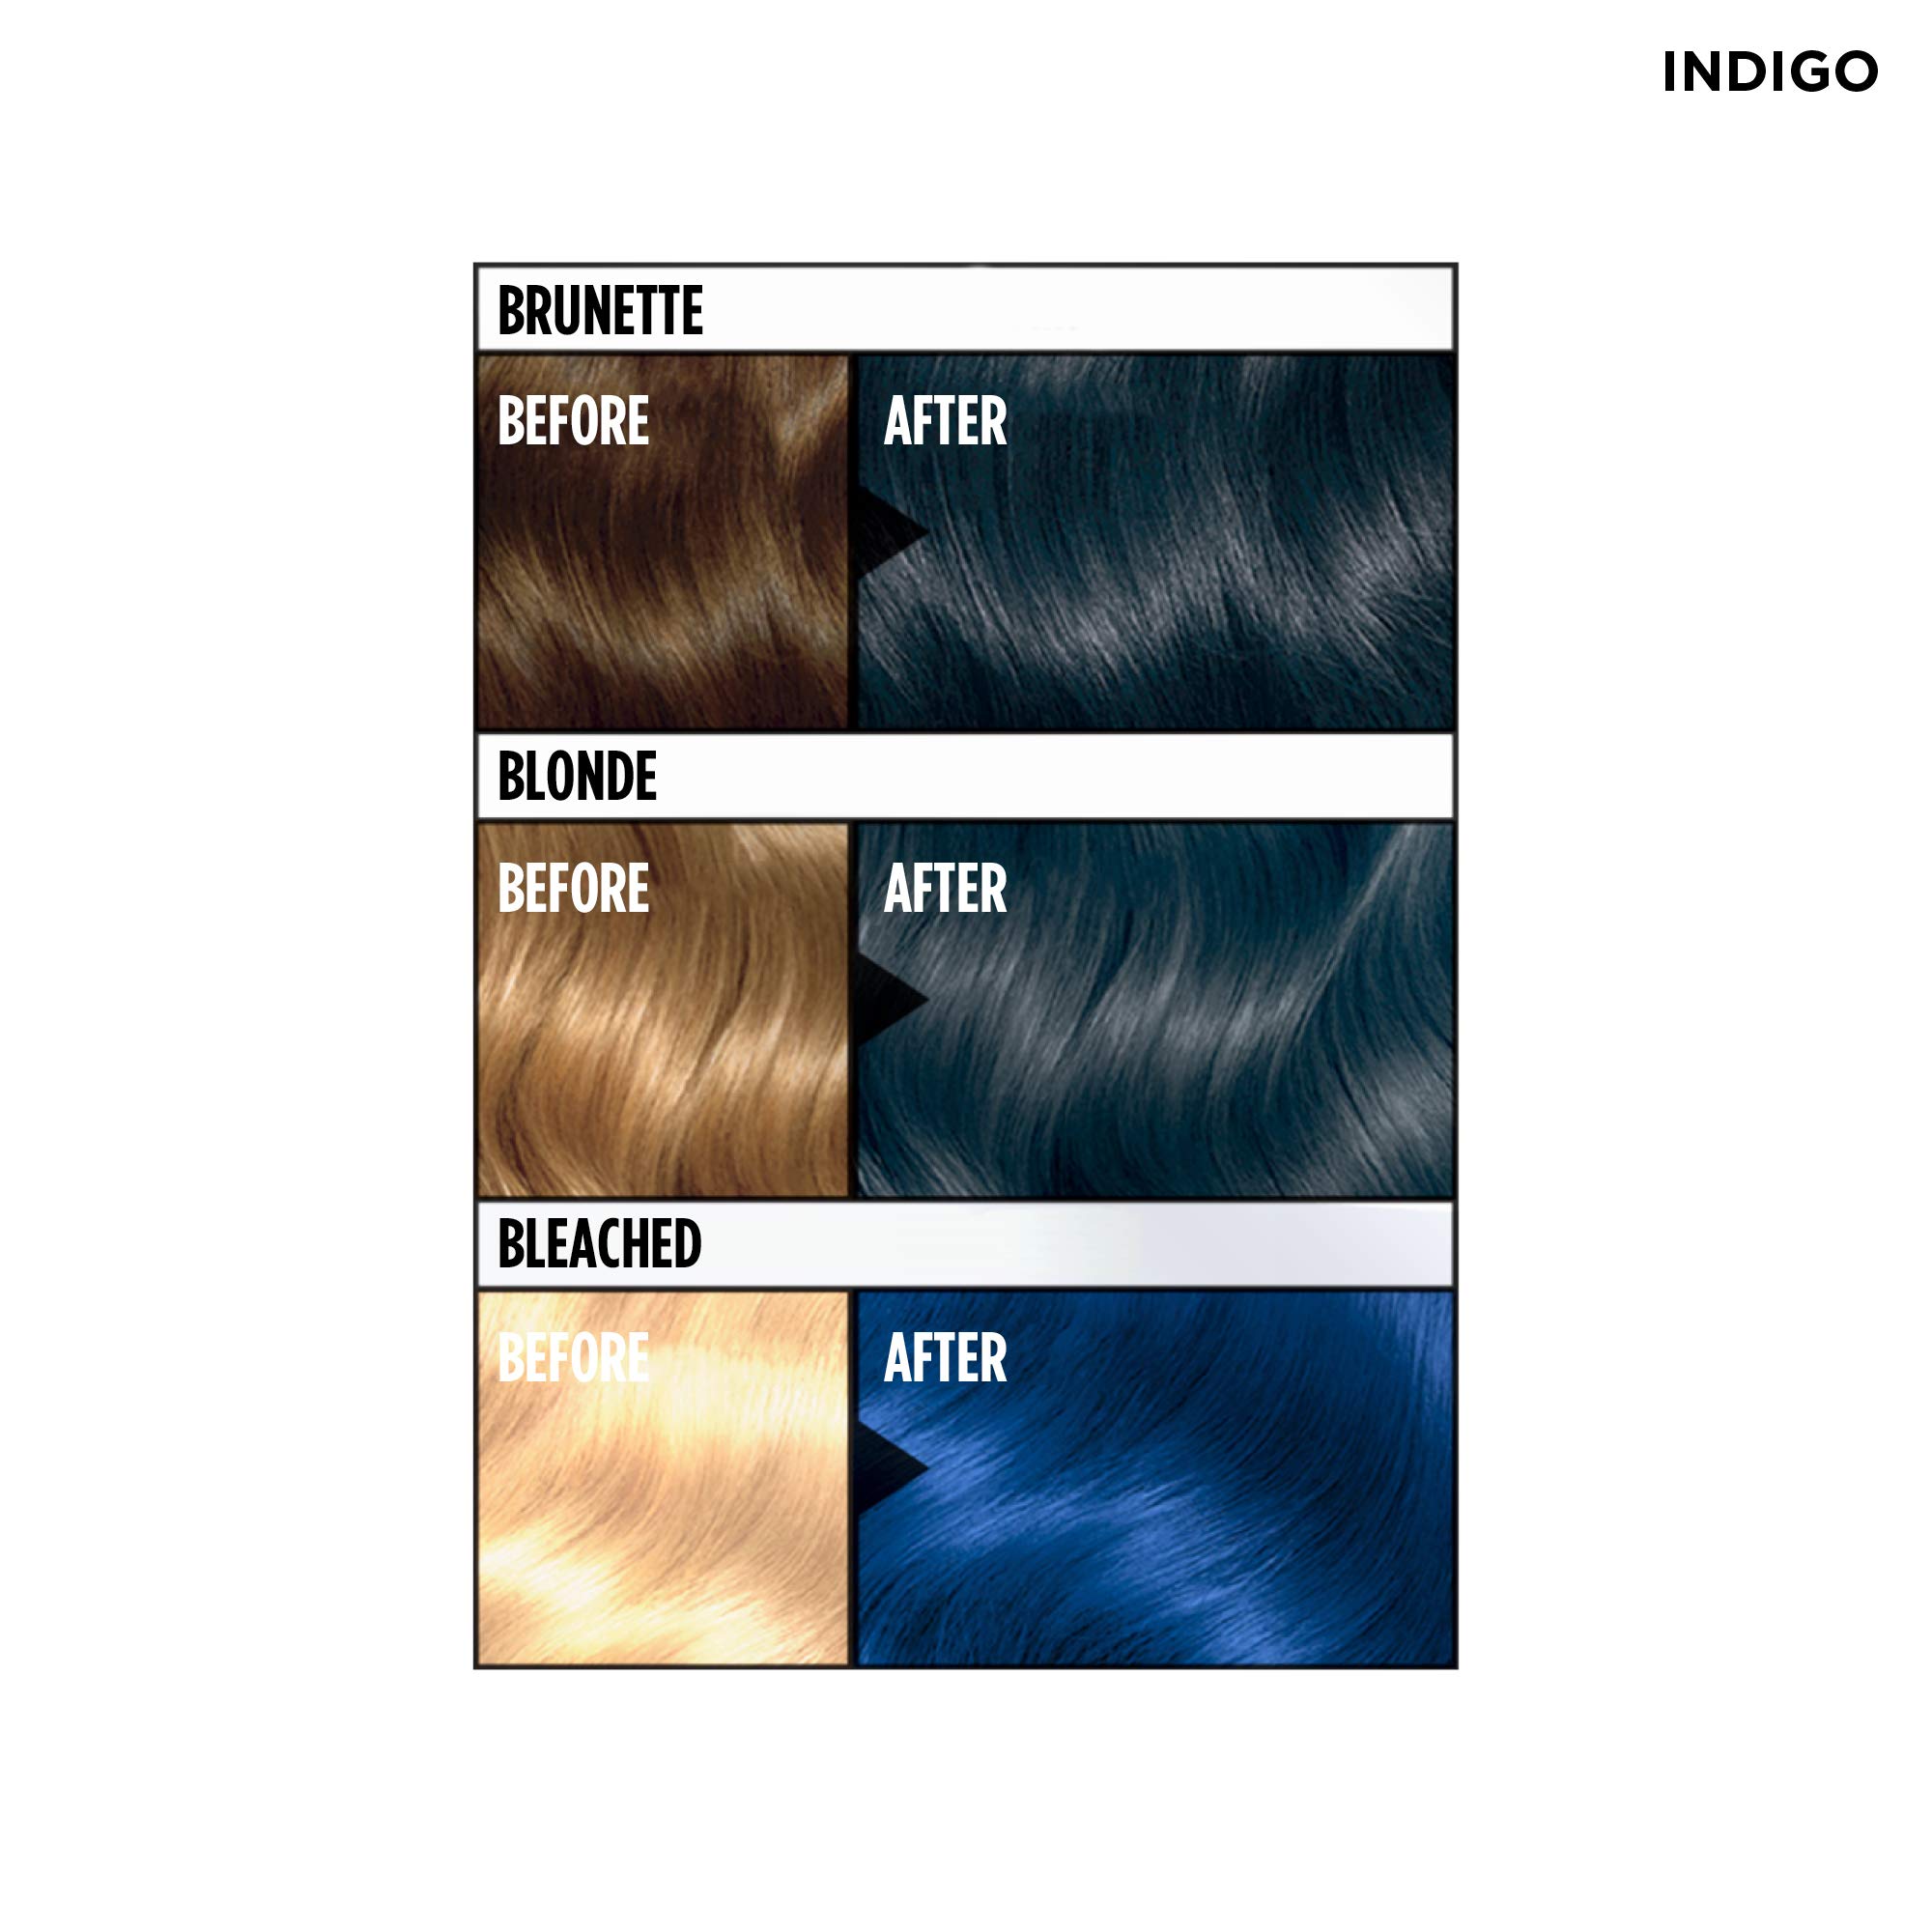 Clairol Color Crave Semi-Permanent Hair Dye, Indigo Hair Color, 1 Count